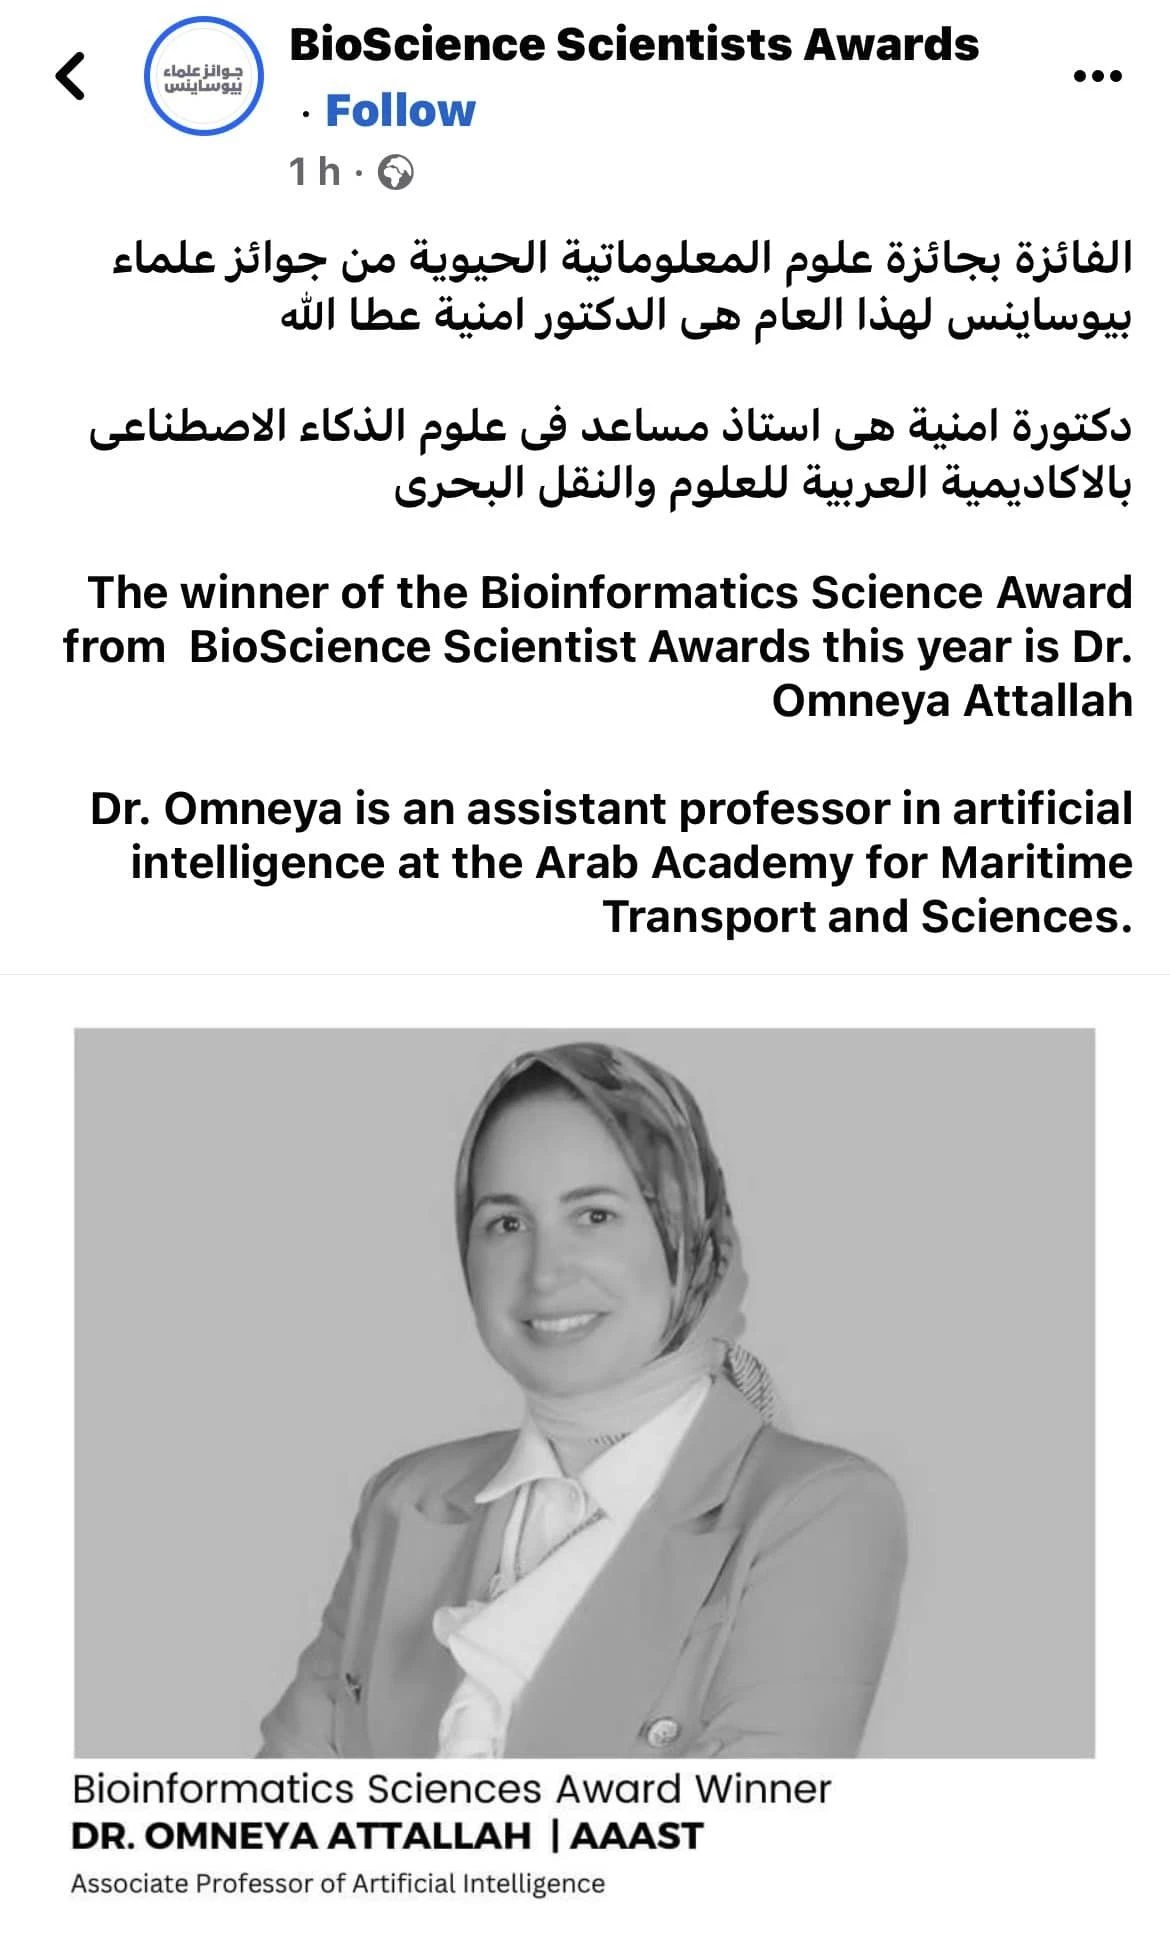 BioScience Scientists Awards2